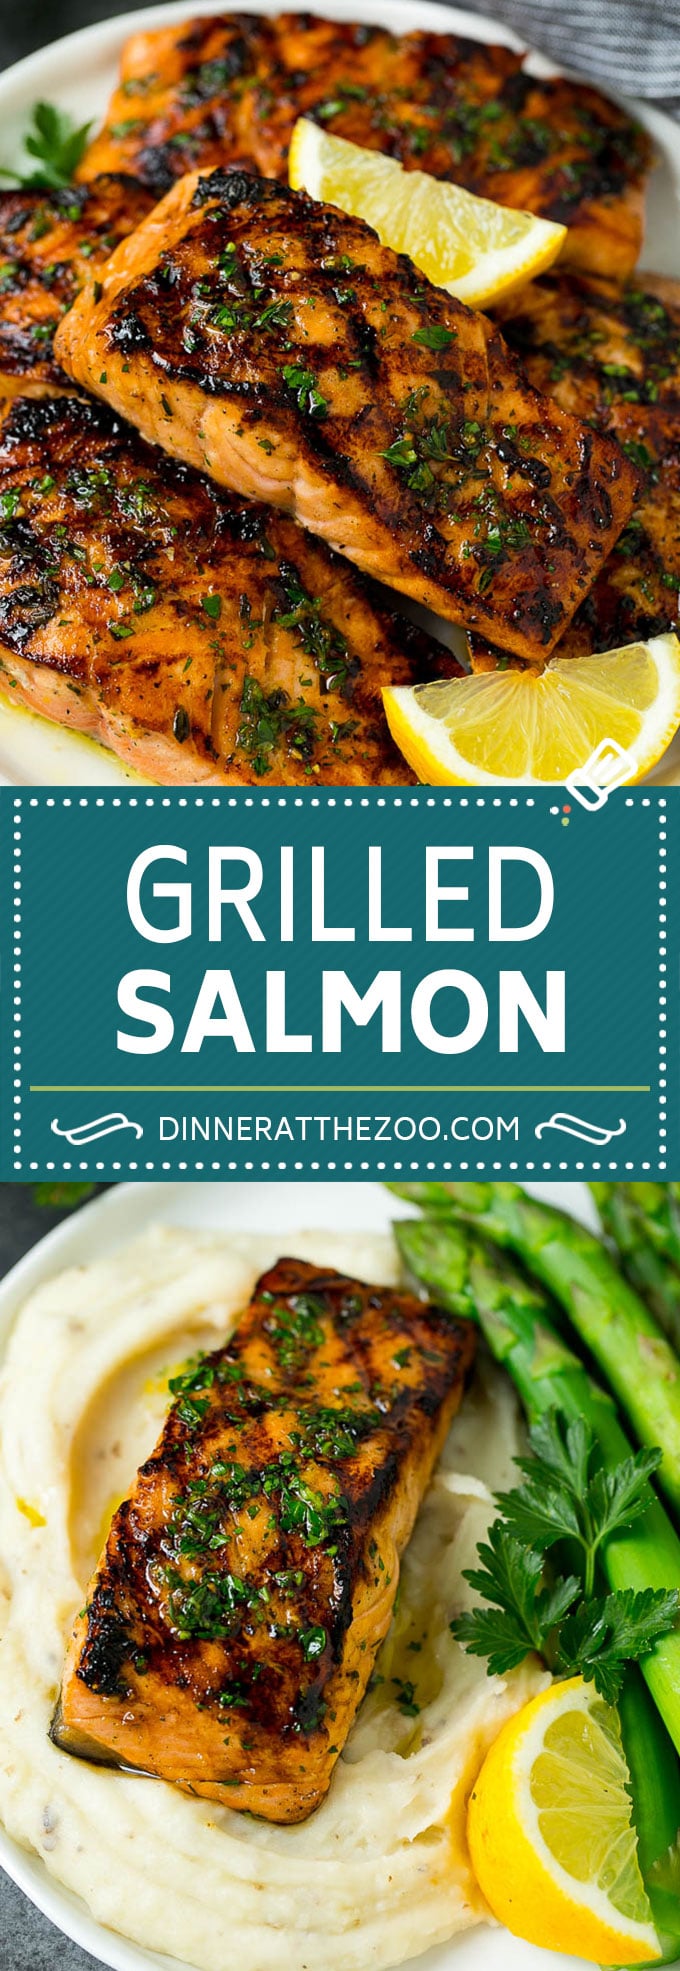 Receta de salmón a la parrilla |  Salmón Marinado |  Receta saludable de salmón #salmón # grill #mariscos # adobo # cena #dinneratthezoo